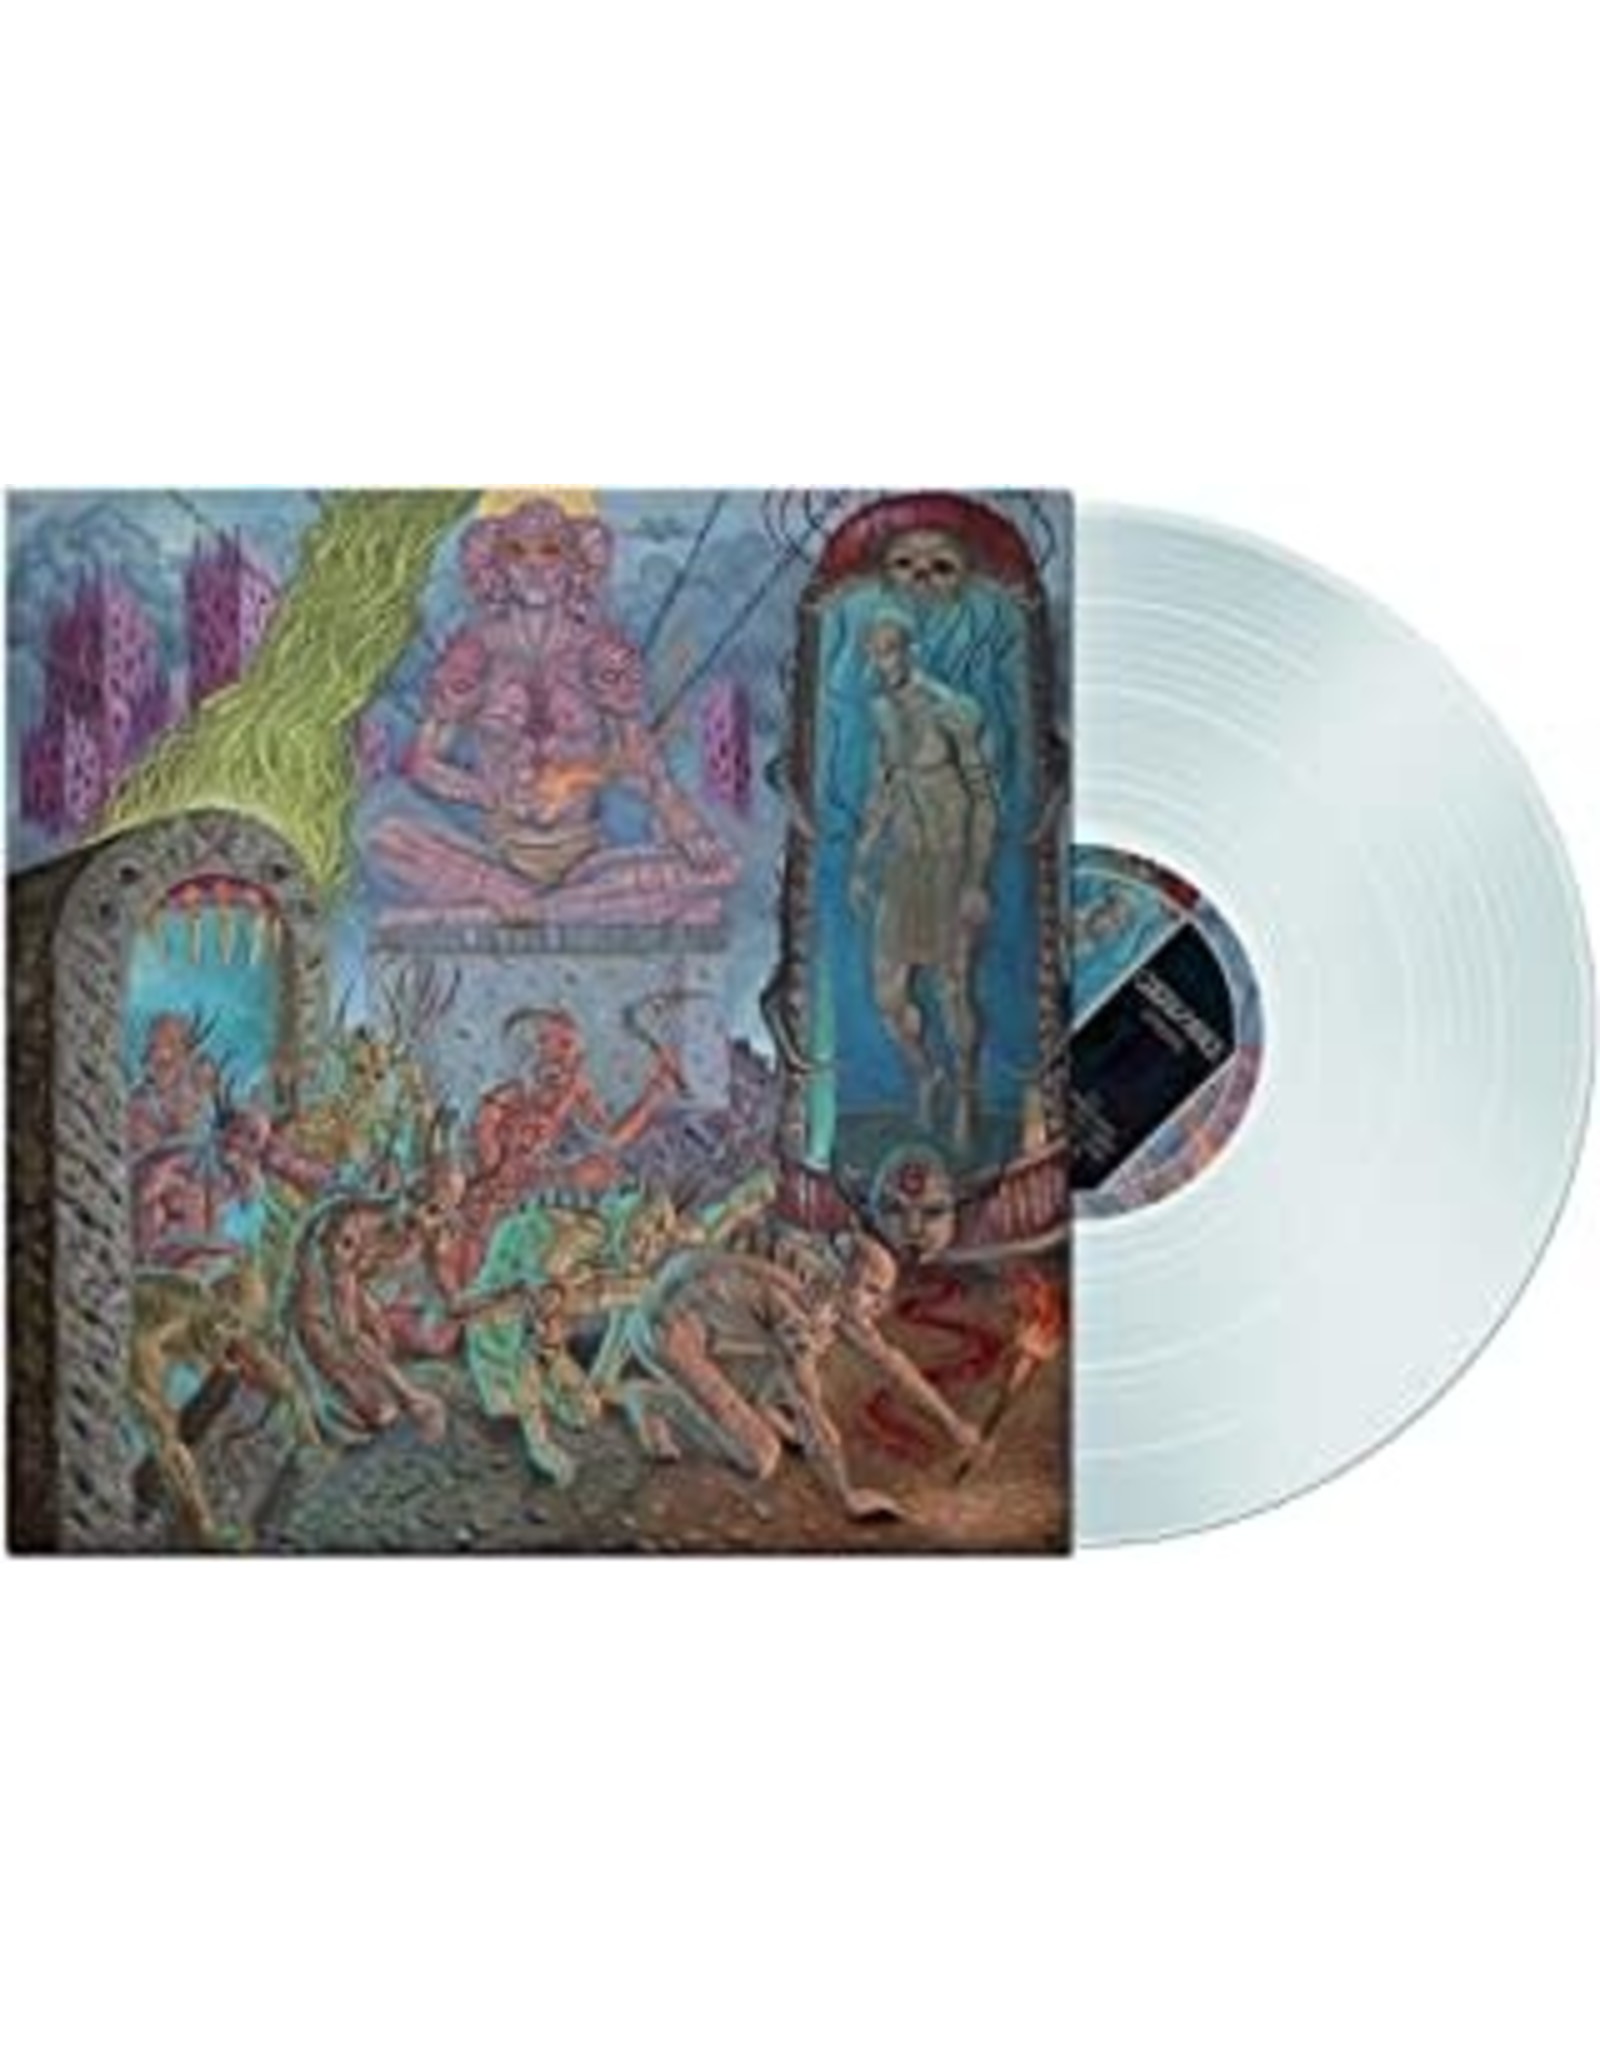 Cognizance - Upheaval CLEAR LIGHT BLUE LP